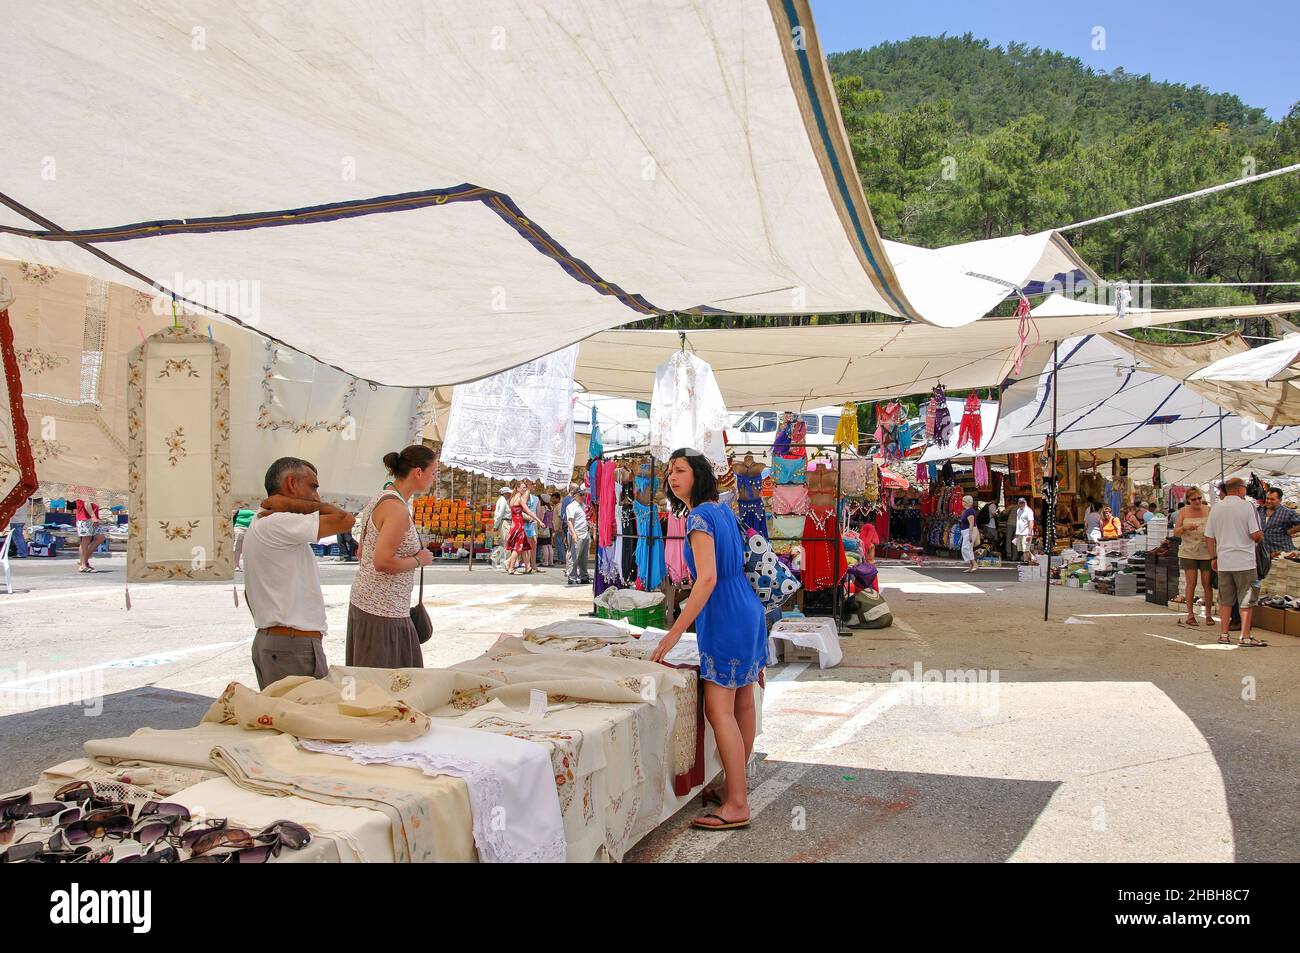 Handicraft market stalls in outdoor market, Icmeler, Mulga Province, Turkey Stock Photo